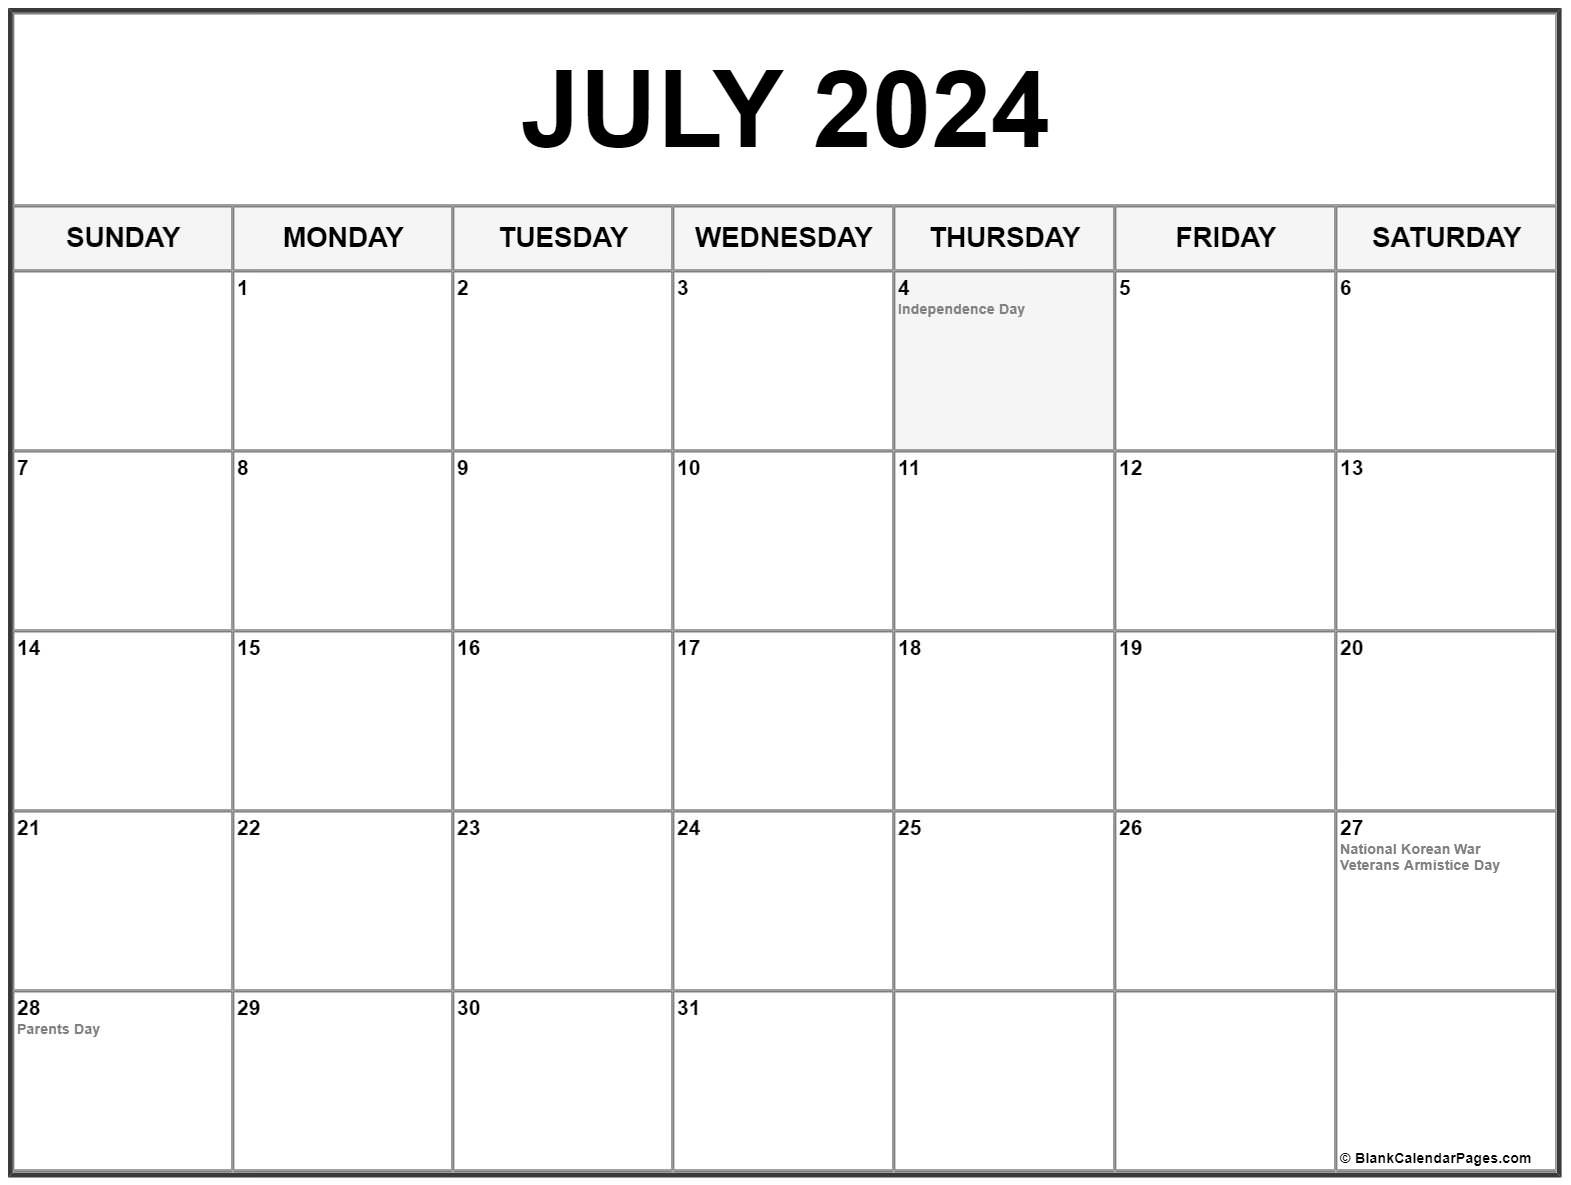 July 2024 With Holidays Calendar regarding July 2024 Calendar Holidays